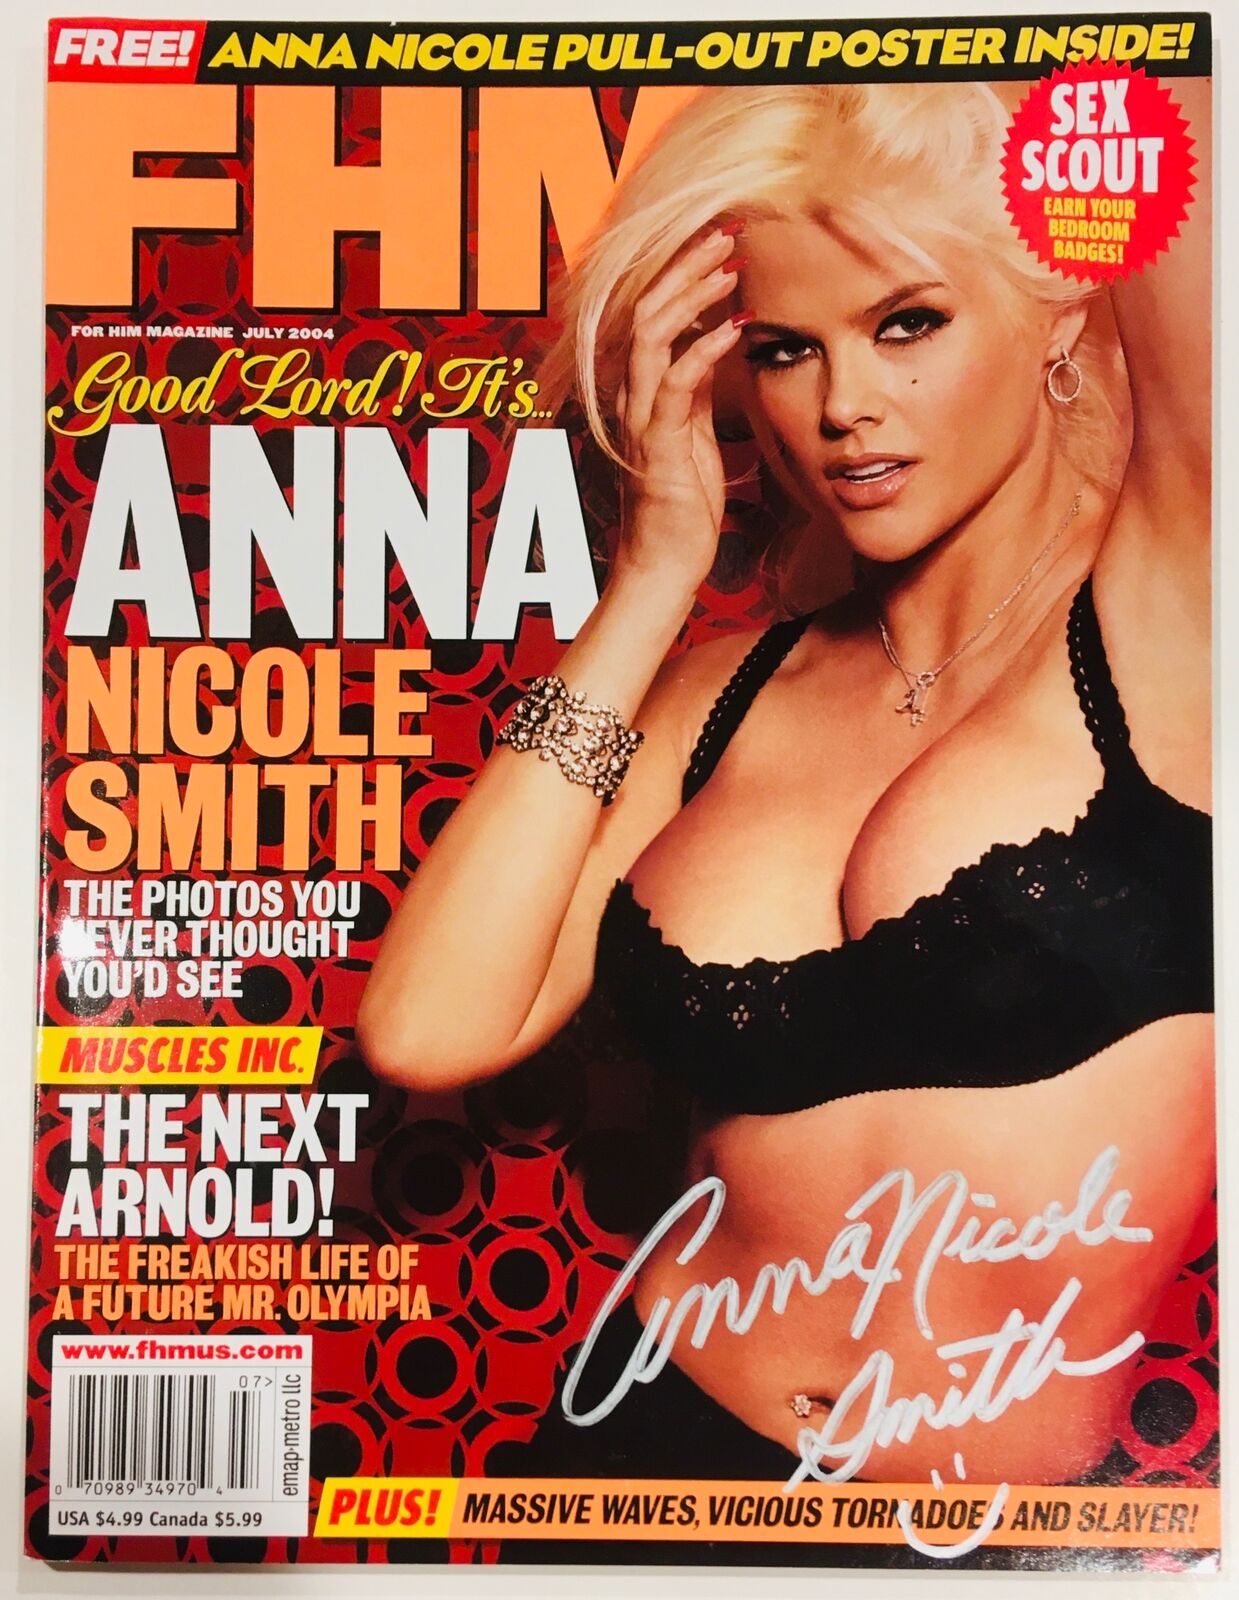 Anna Nicole Smith Signed FHM Magazine Cover Full Magazine 2004 PMOY Autograph